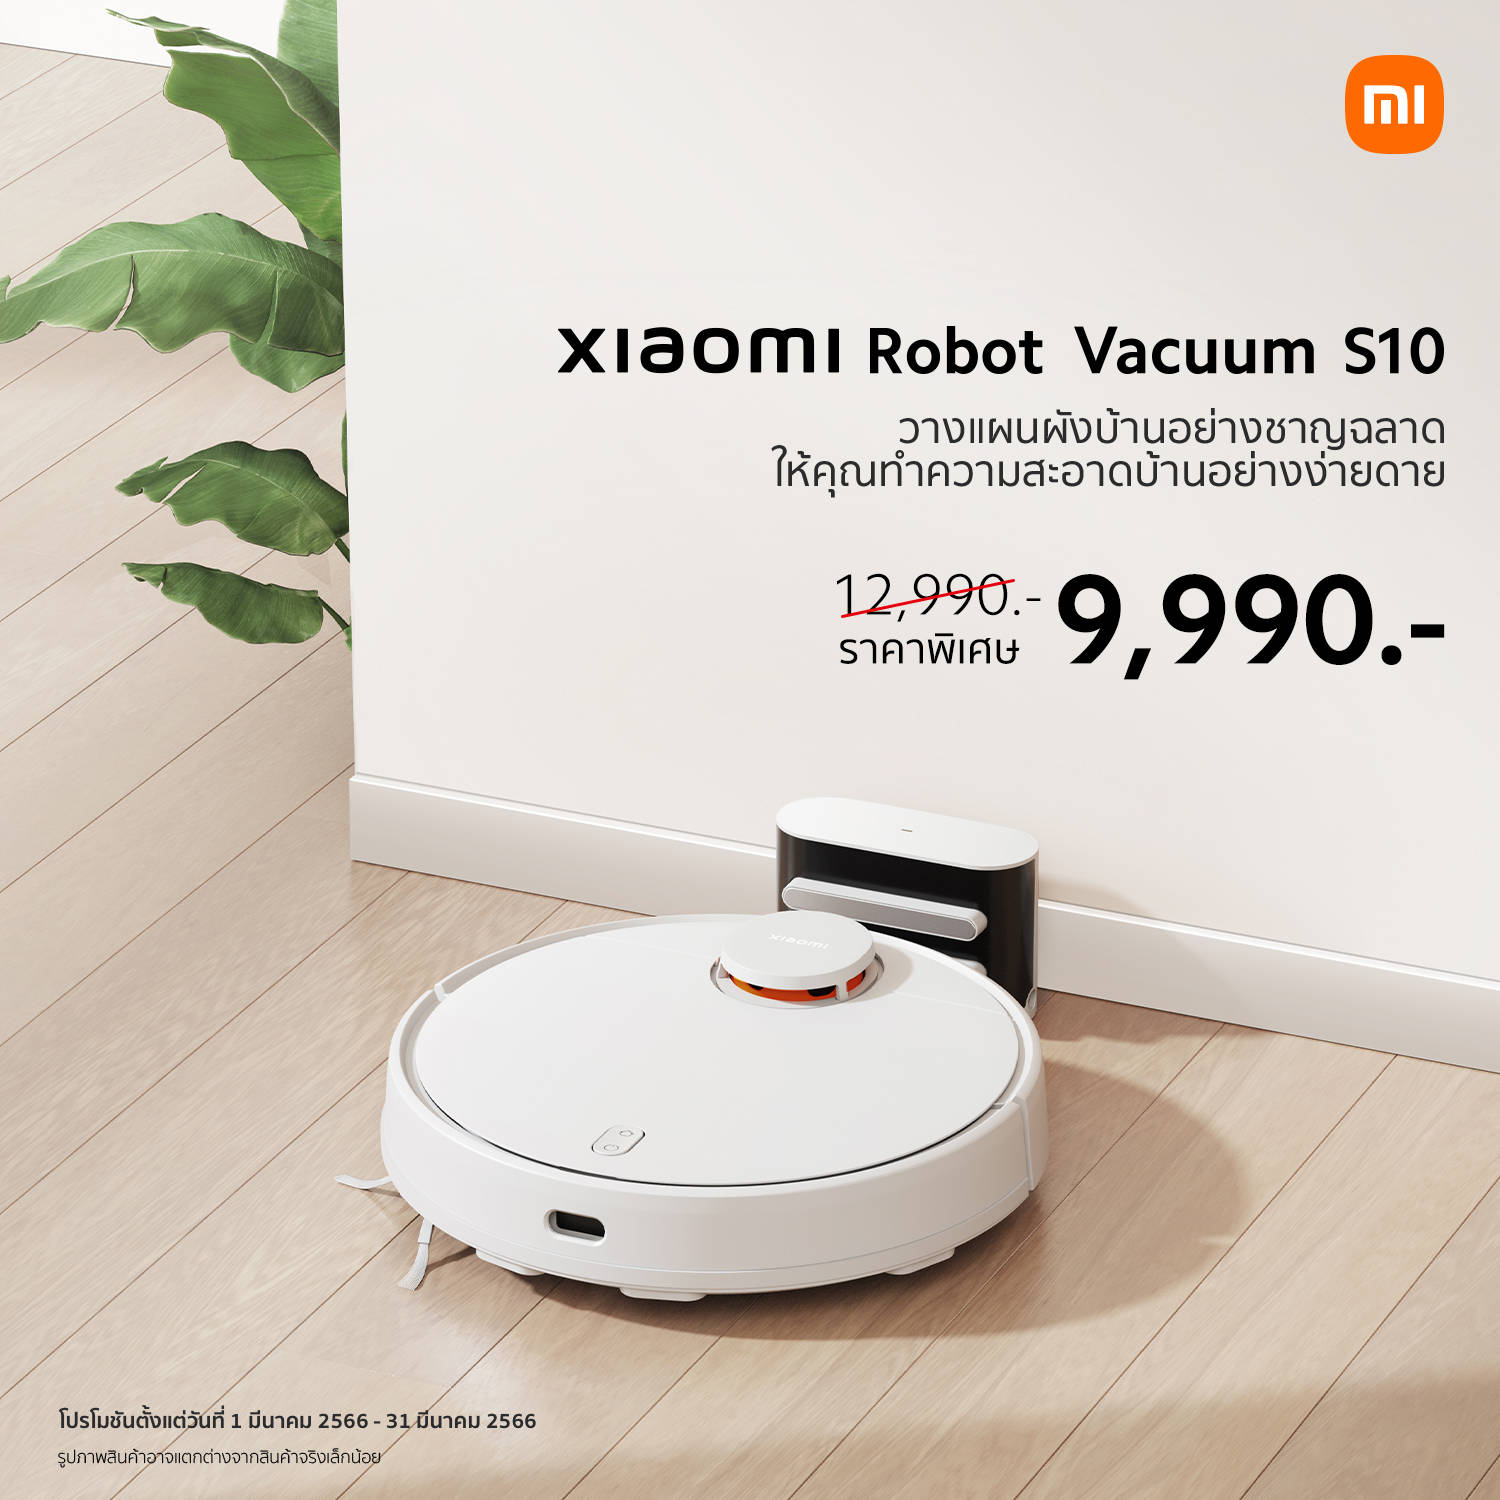 Xiaomi Robot Vacuum S10 KV | Robot Vacuum S10 | รีวิว Xiaomi Robot Vacuum S10 หุ่นยนต์ดูดฝุ่นถูพื้น 2-in-1 วางผังบ้านฉลาดด้วยเลเซอร์ รวดเร็วแม่นยำและราคาคุ้ม!